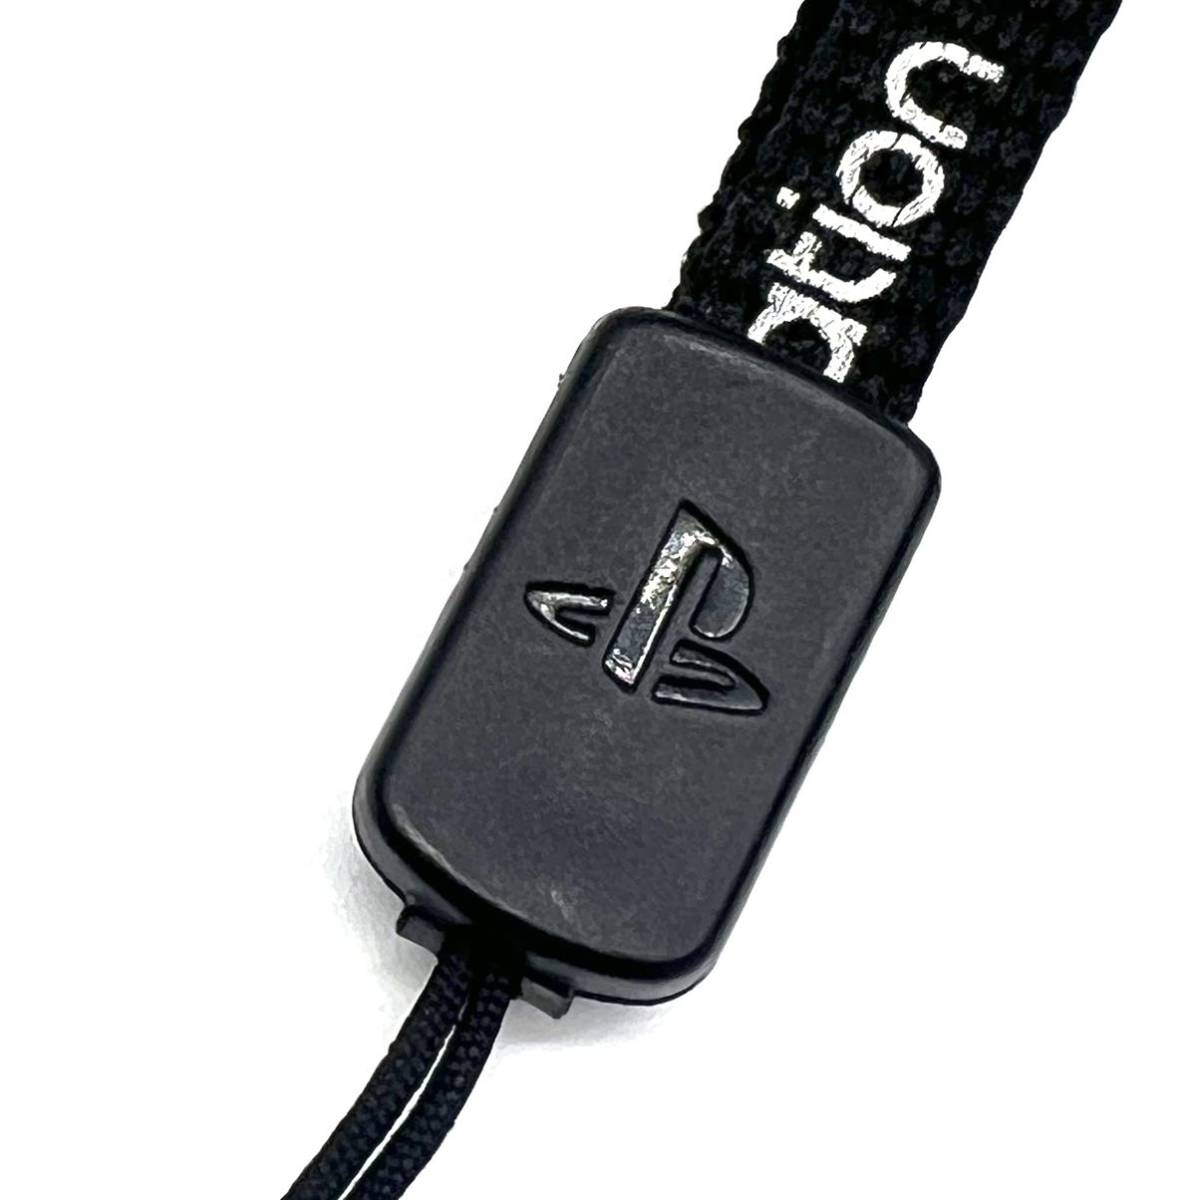  rare 1999 PS PocketStation PocketStation optional long strap retro PlayStation accessory cord records out of production 